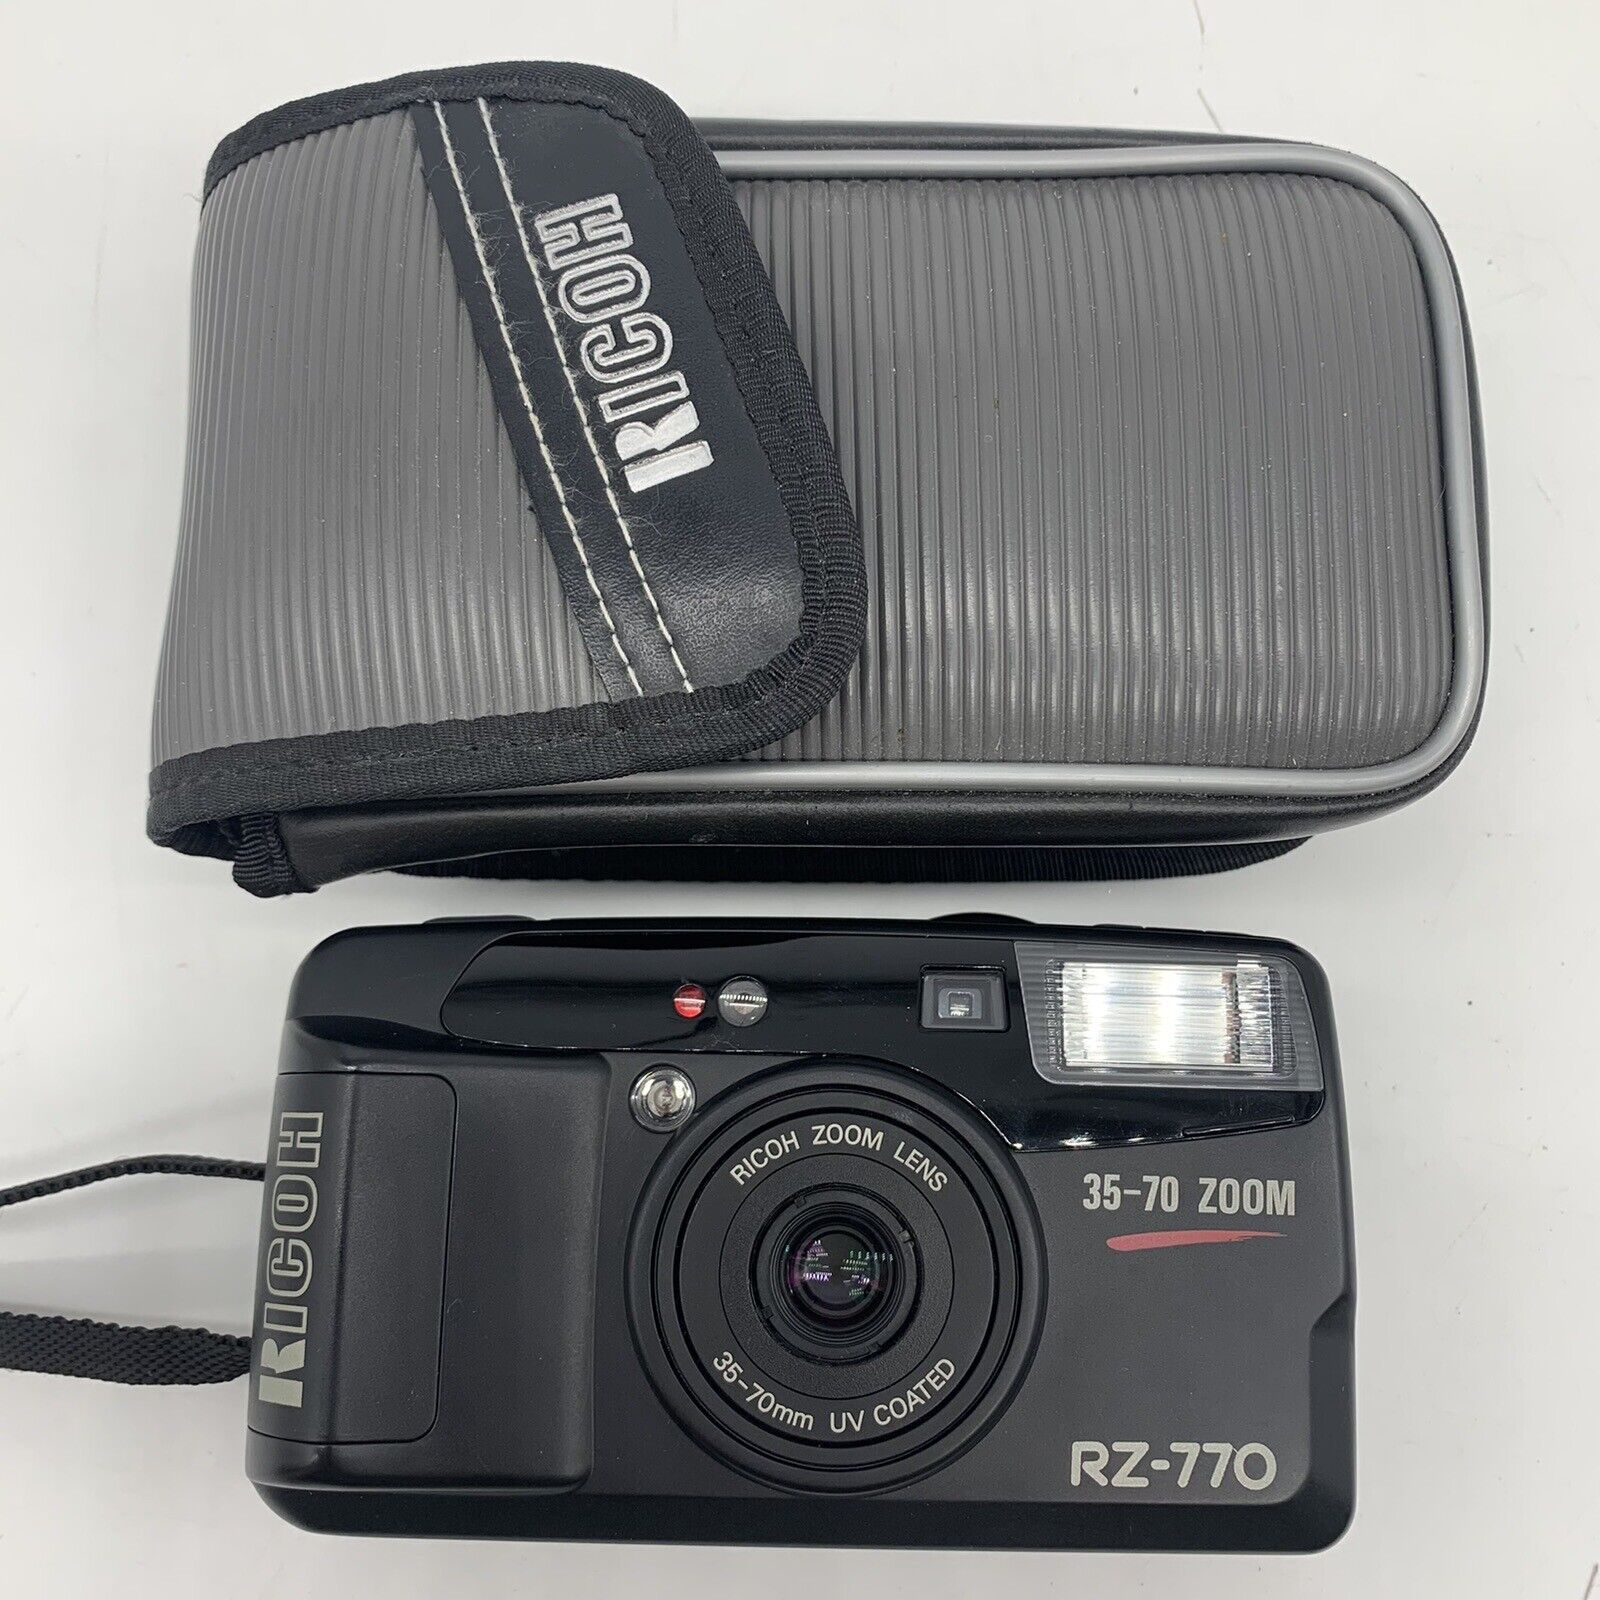 Vintage Ricoh R2-770 Camera 35-70 Zoom #136491